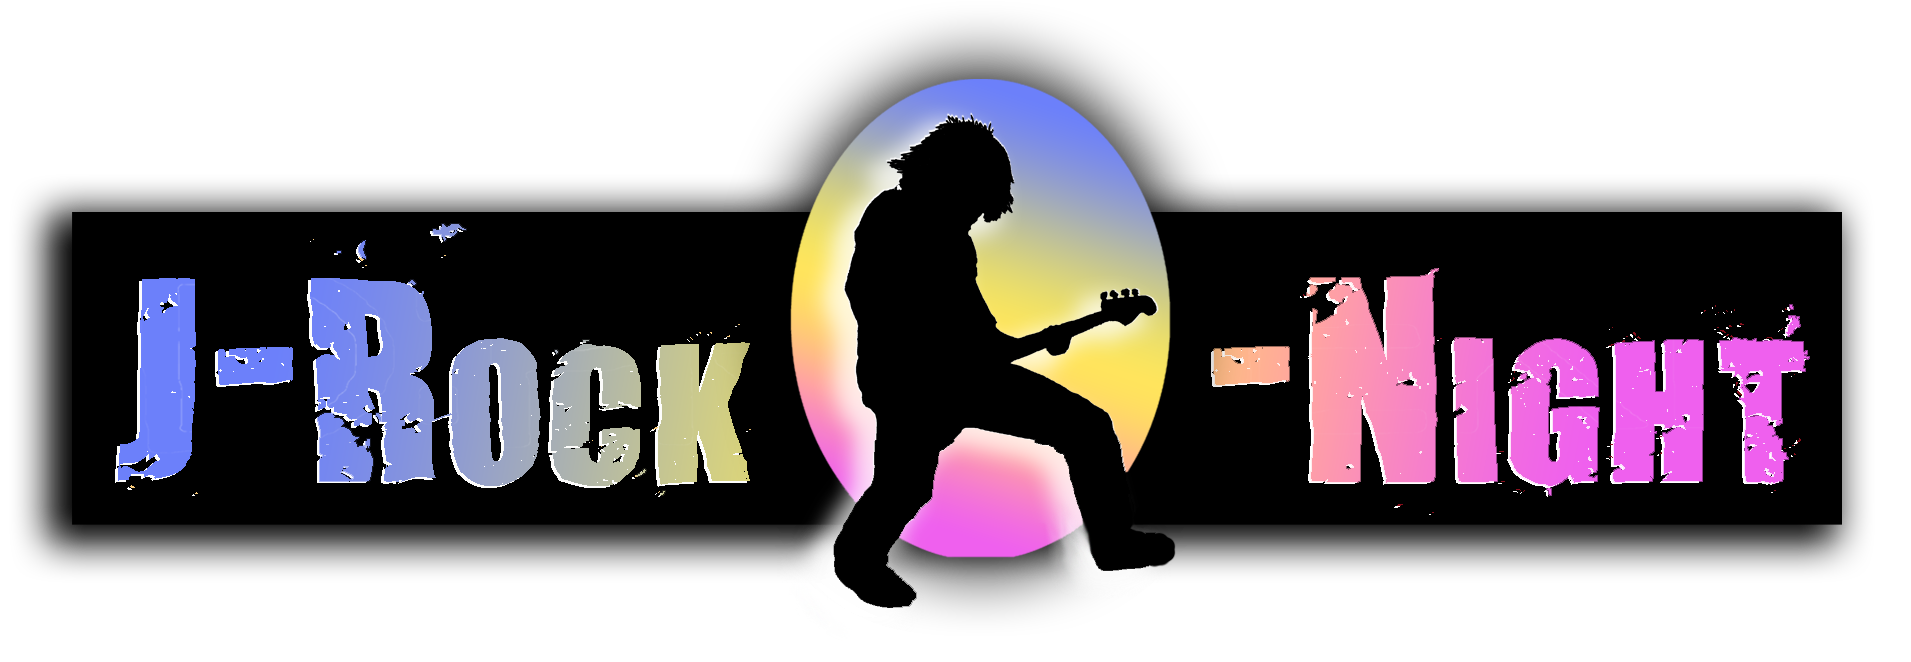 J-Rock-Night